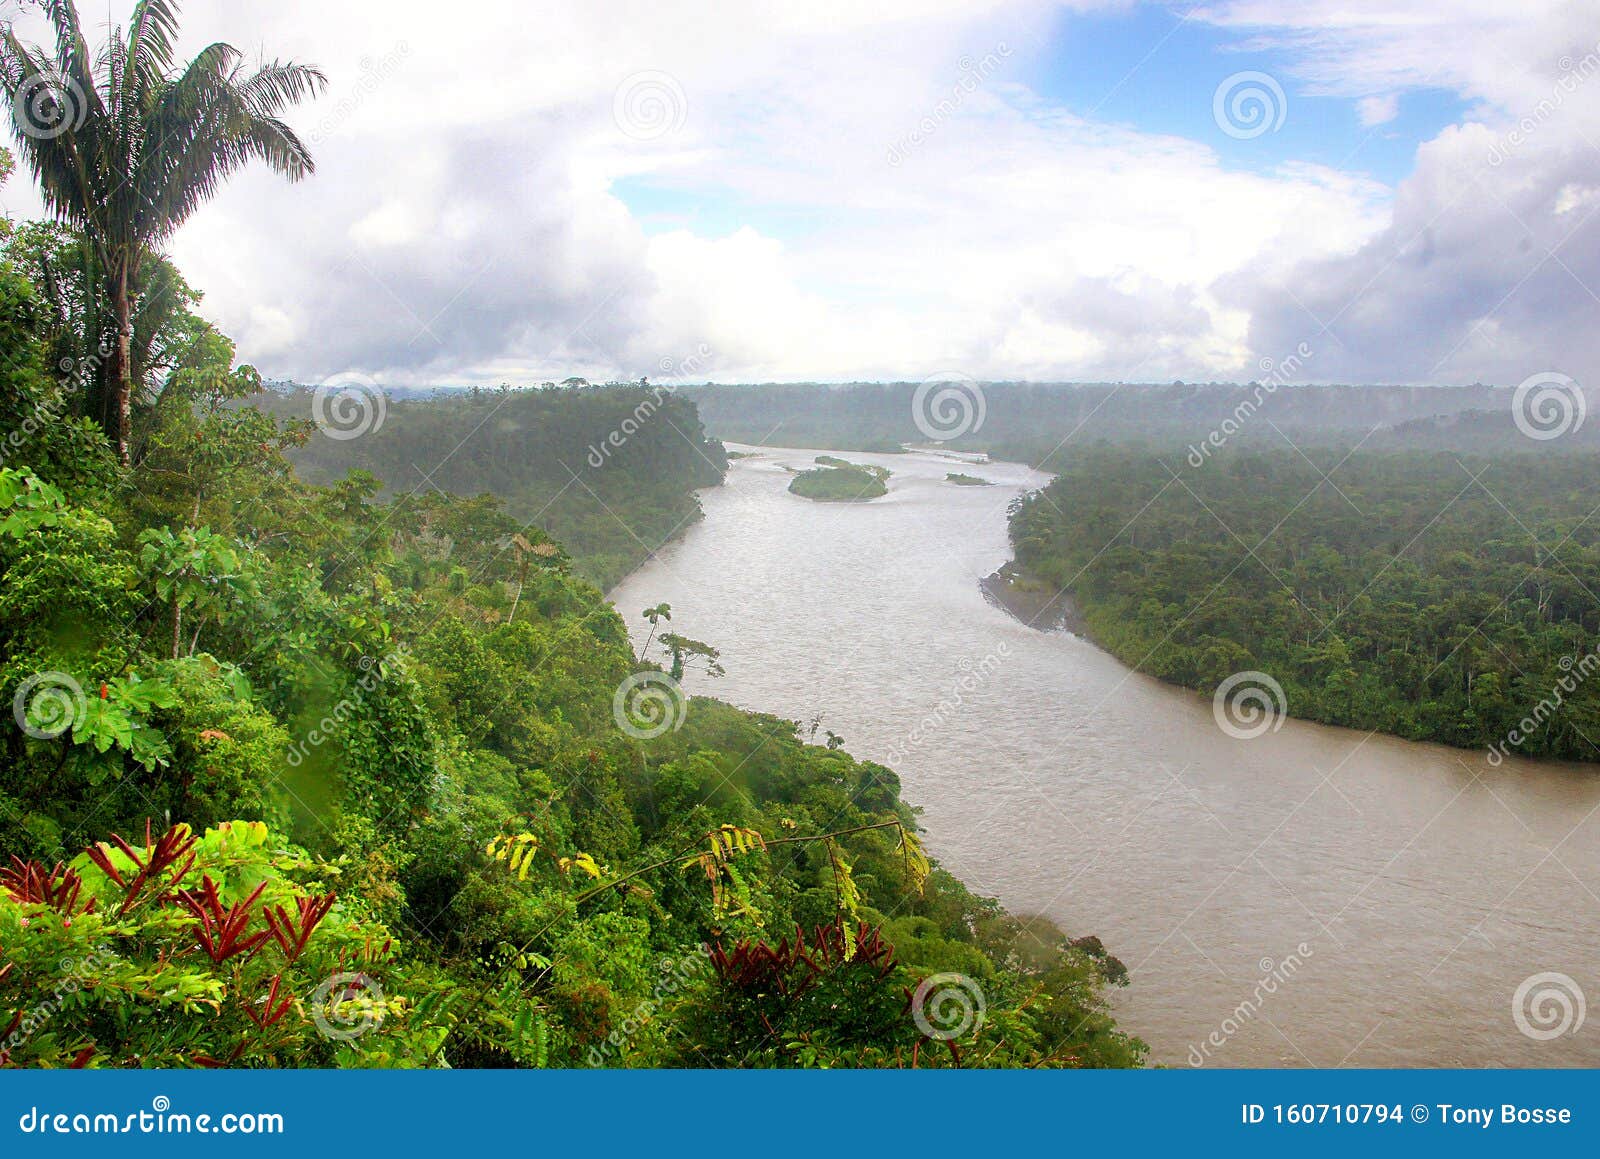 amazon rainforest horizon with river on a rainy day